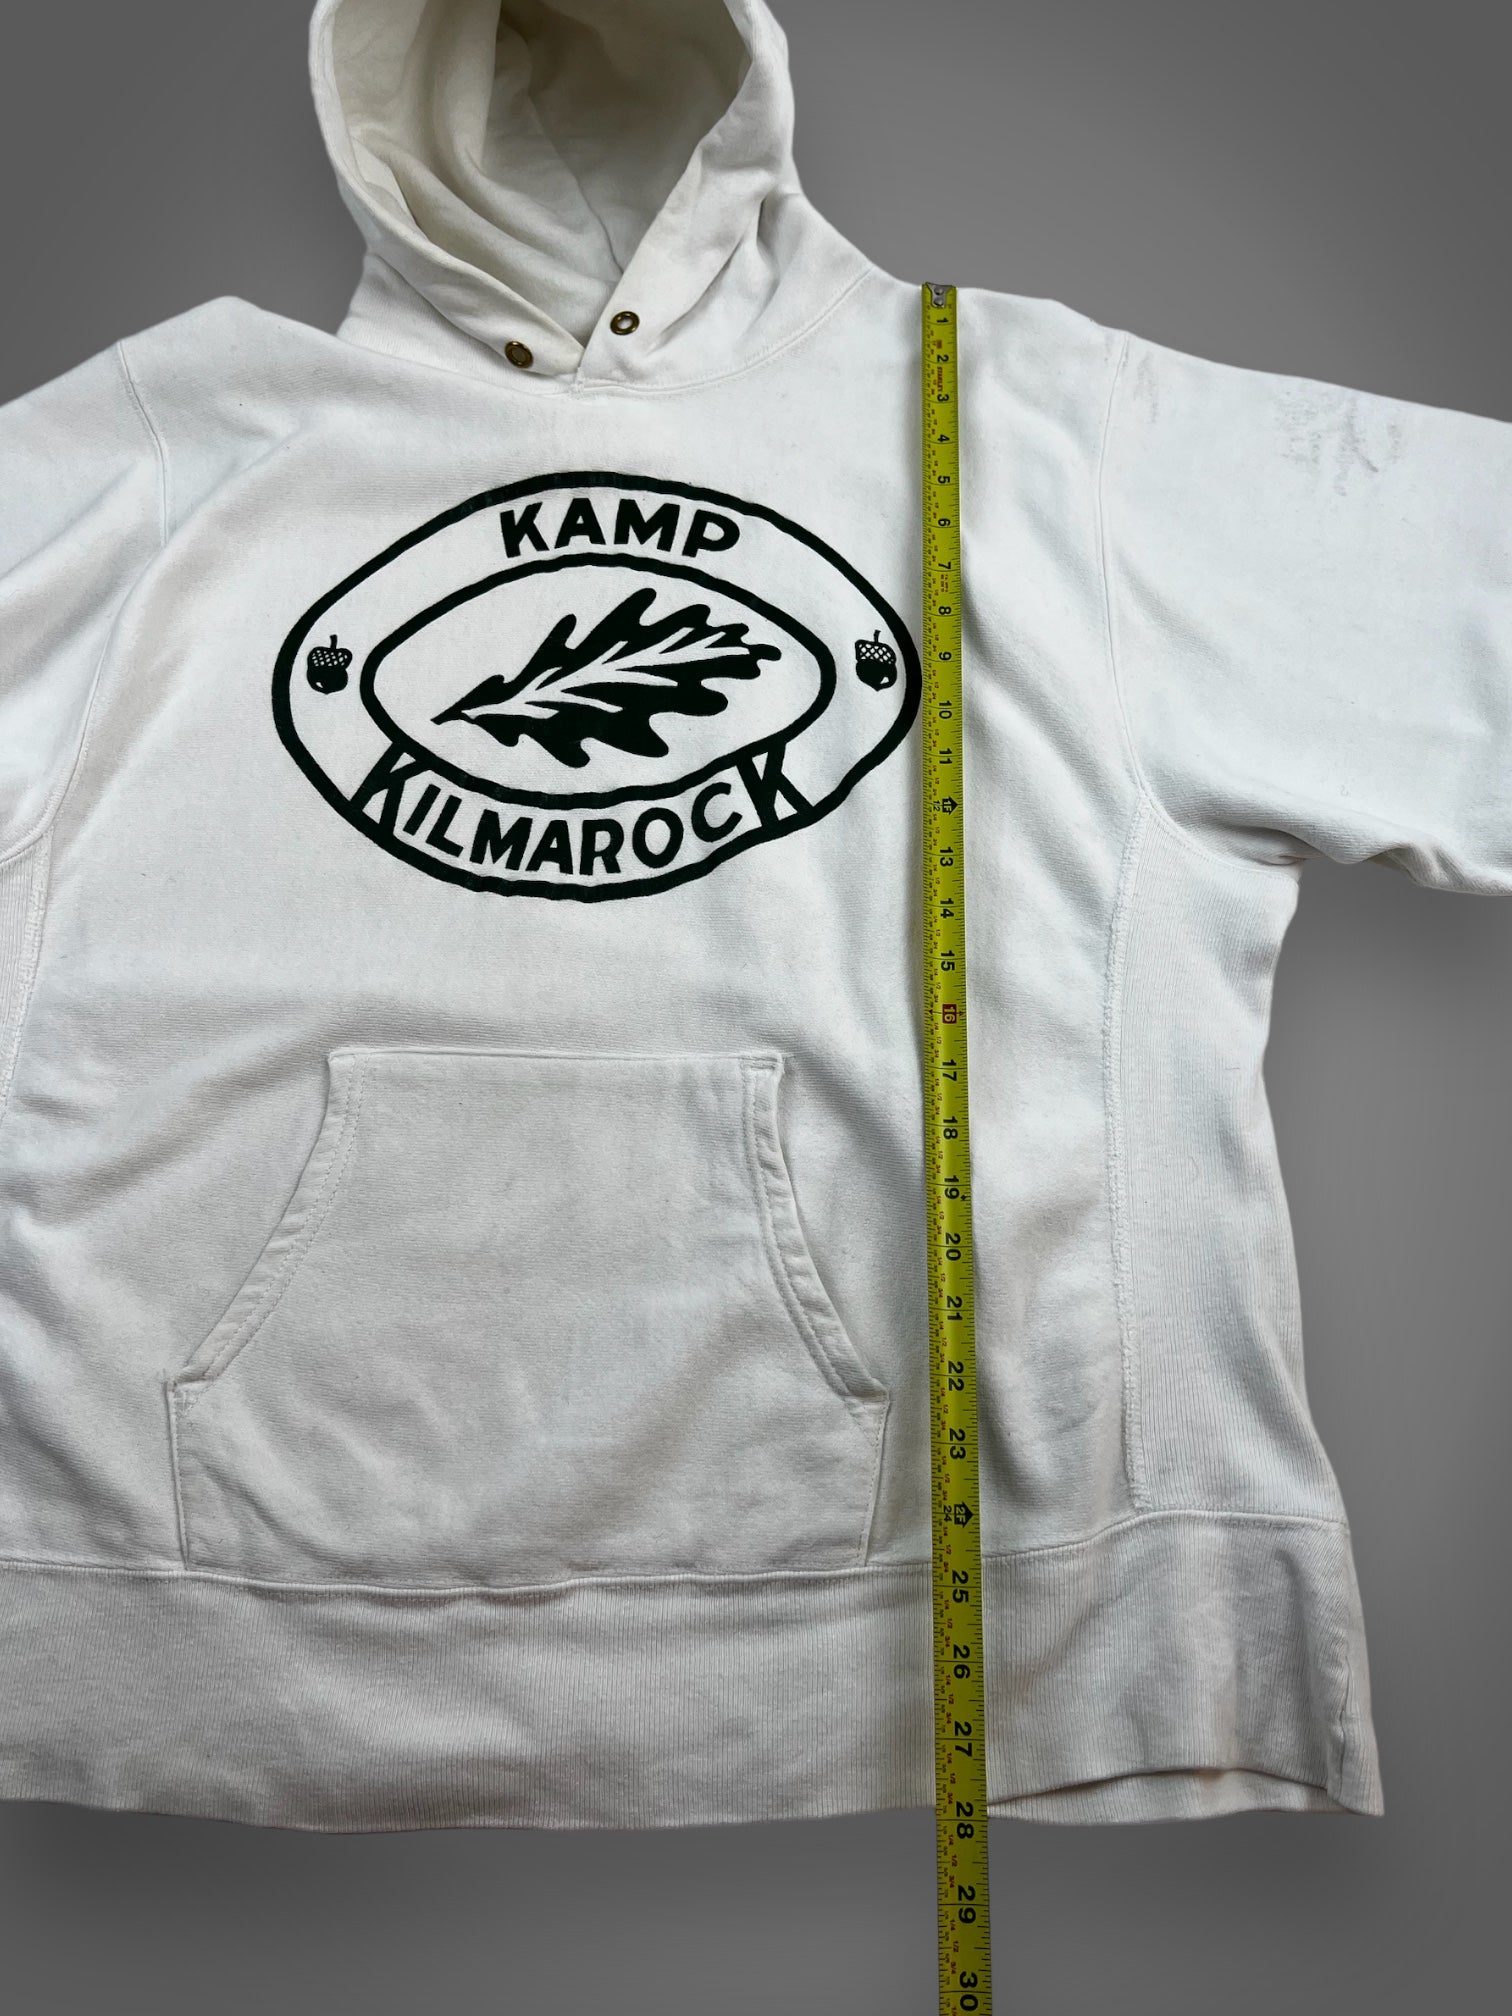 80s Champion Kamp Kilmarock reverse weave sweatshirt XL